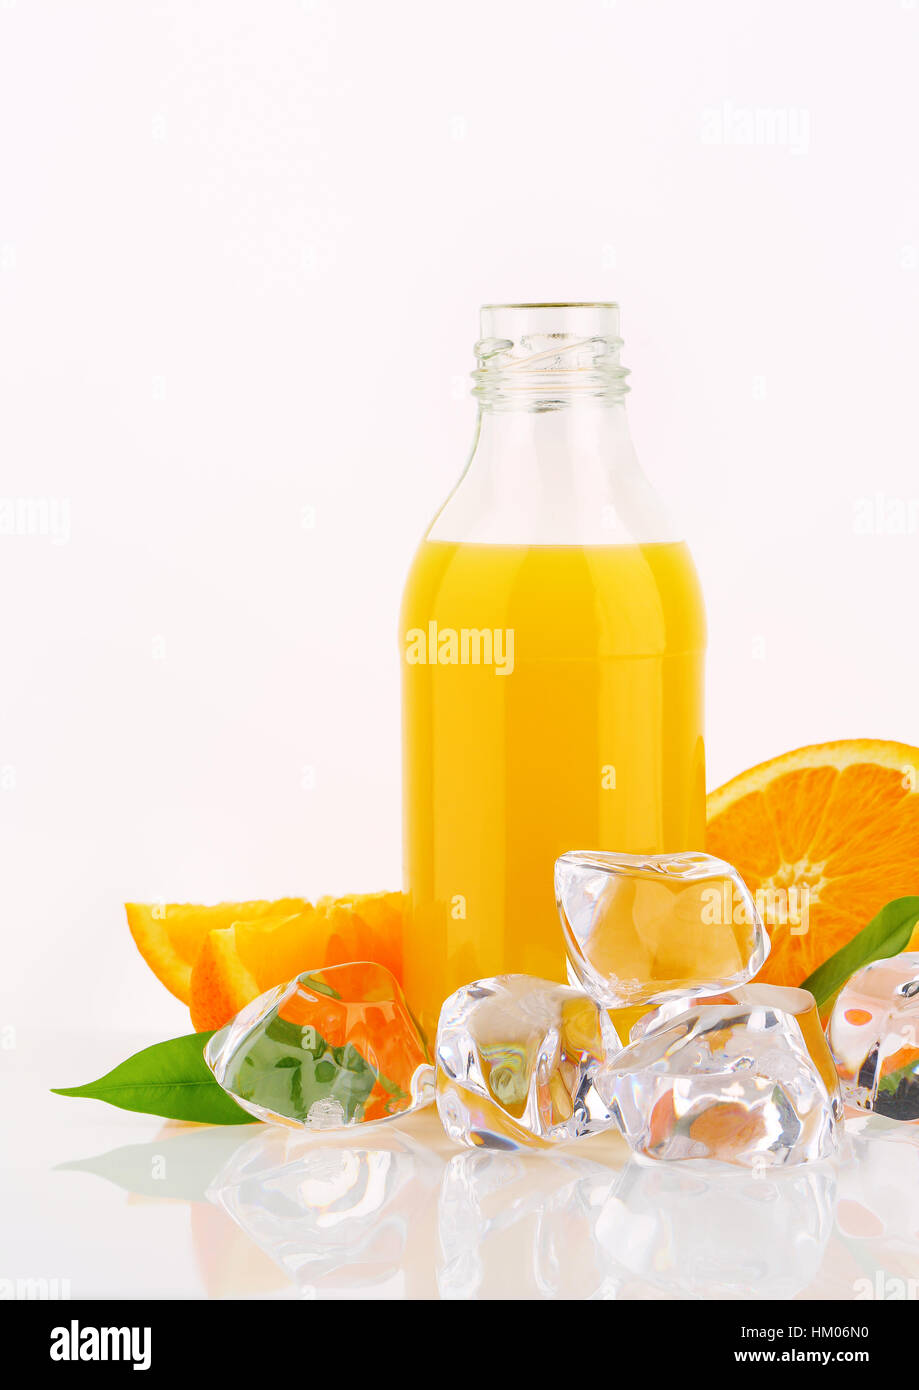 https://c8.alamy.com/comp/HM06N0/bottle-of-orange-juice-and-ice-cubes-on-white-background-HM06N0.jpg